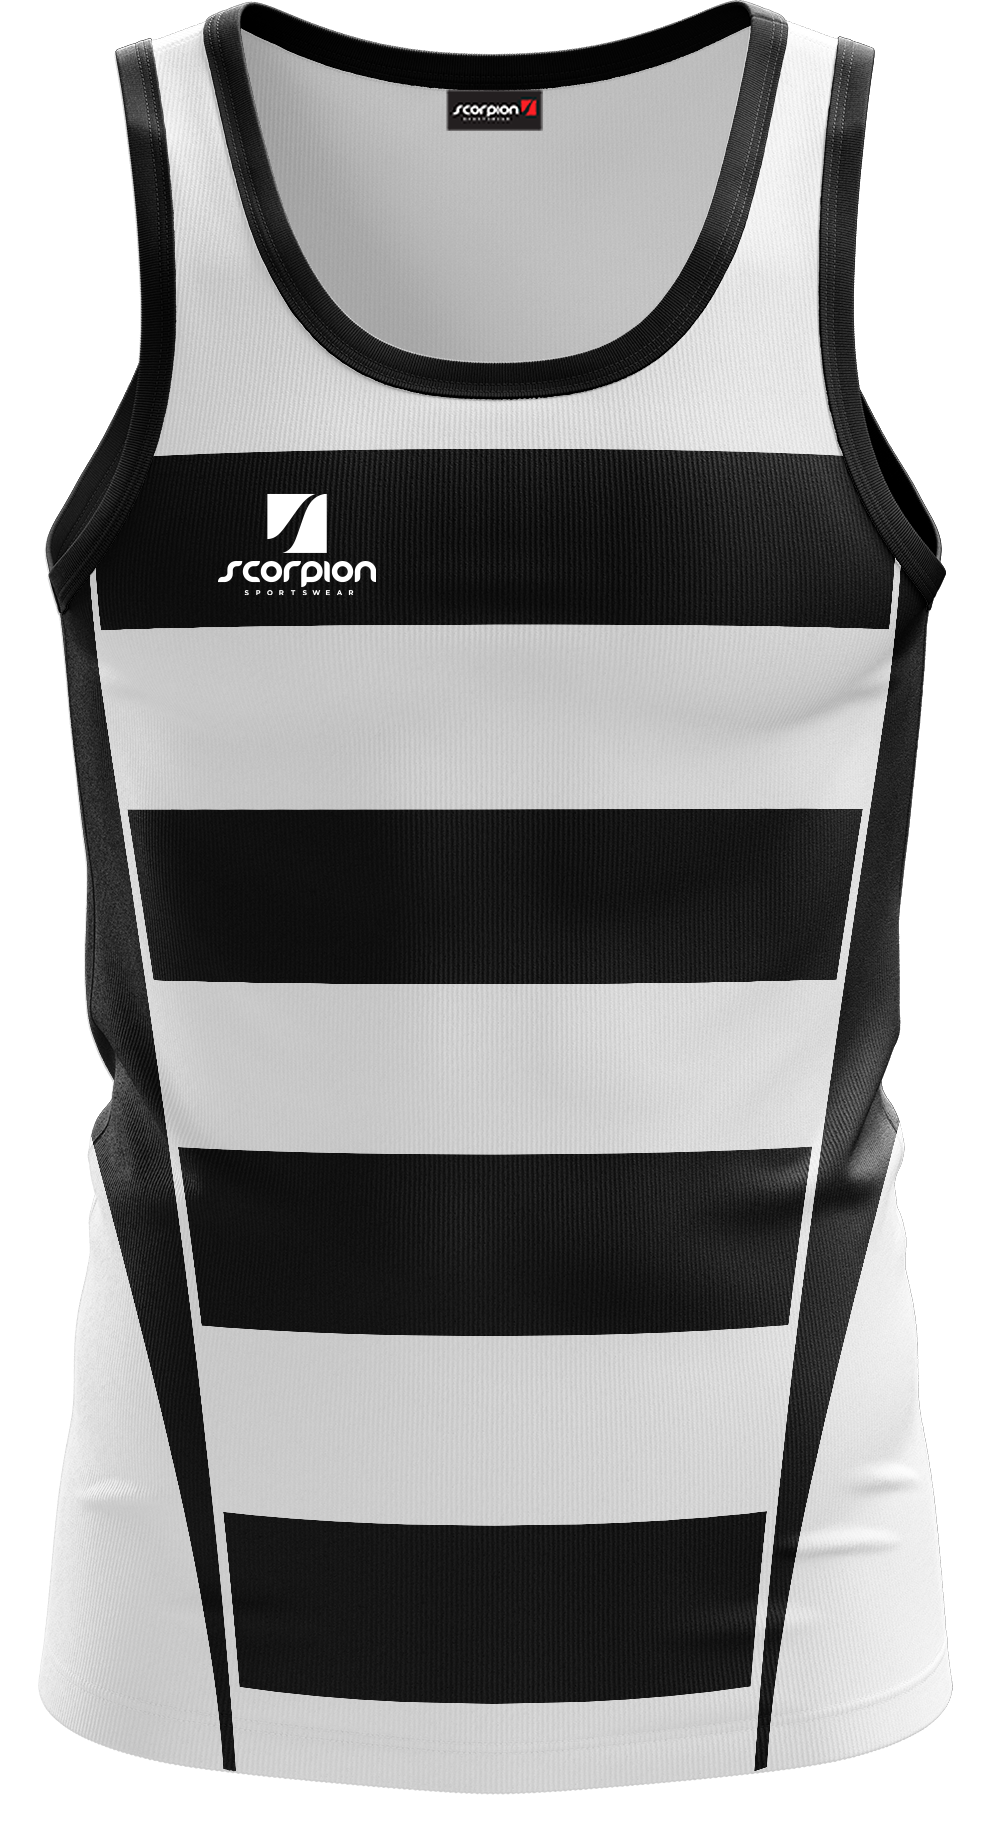 Scorpion Vests Pattern 6 - White/Black